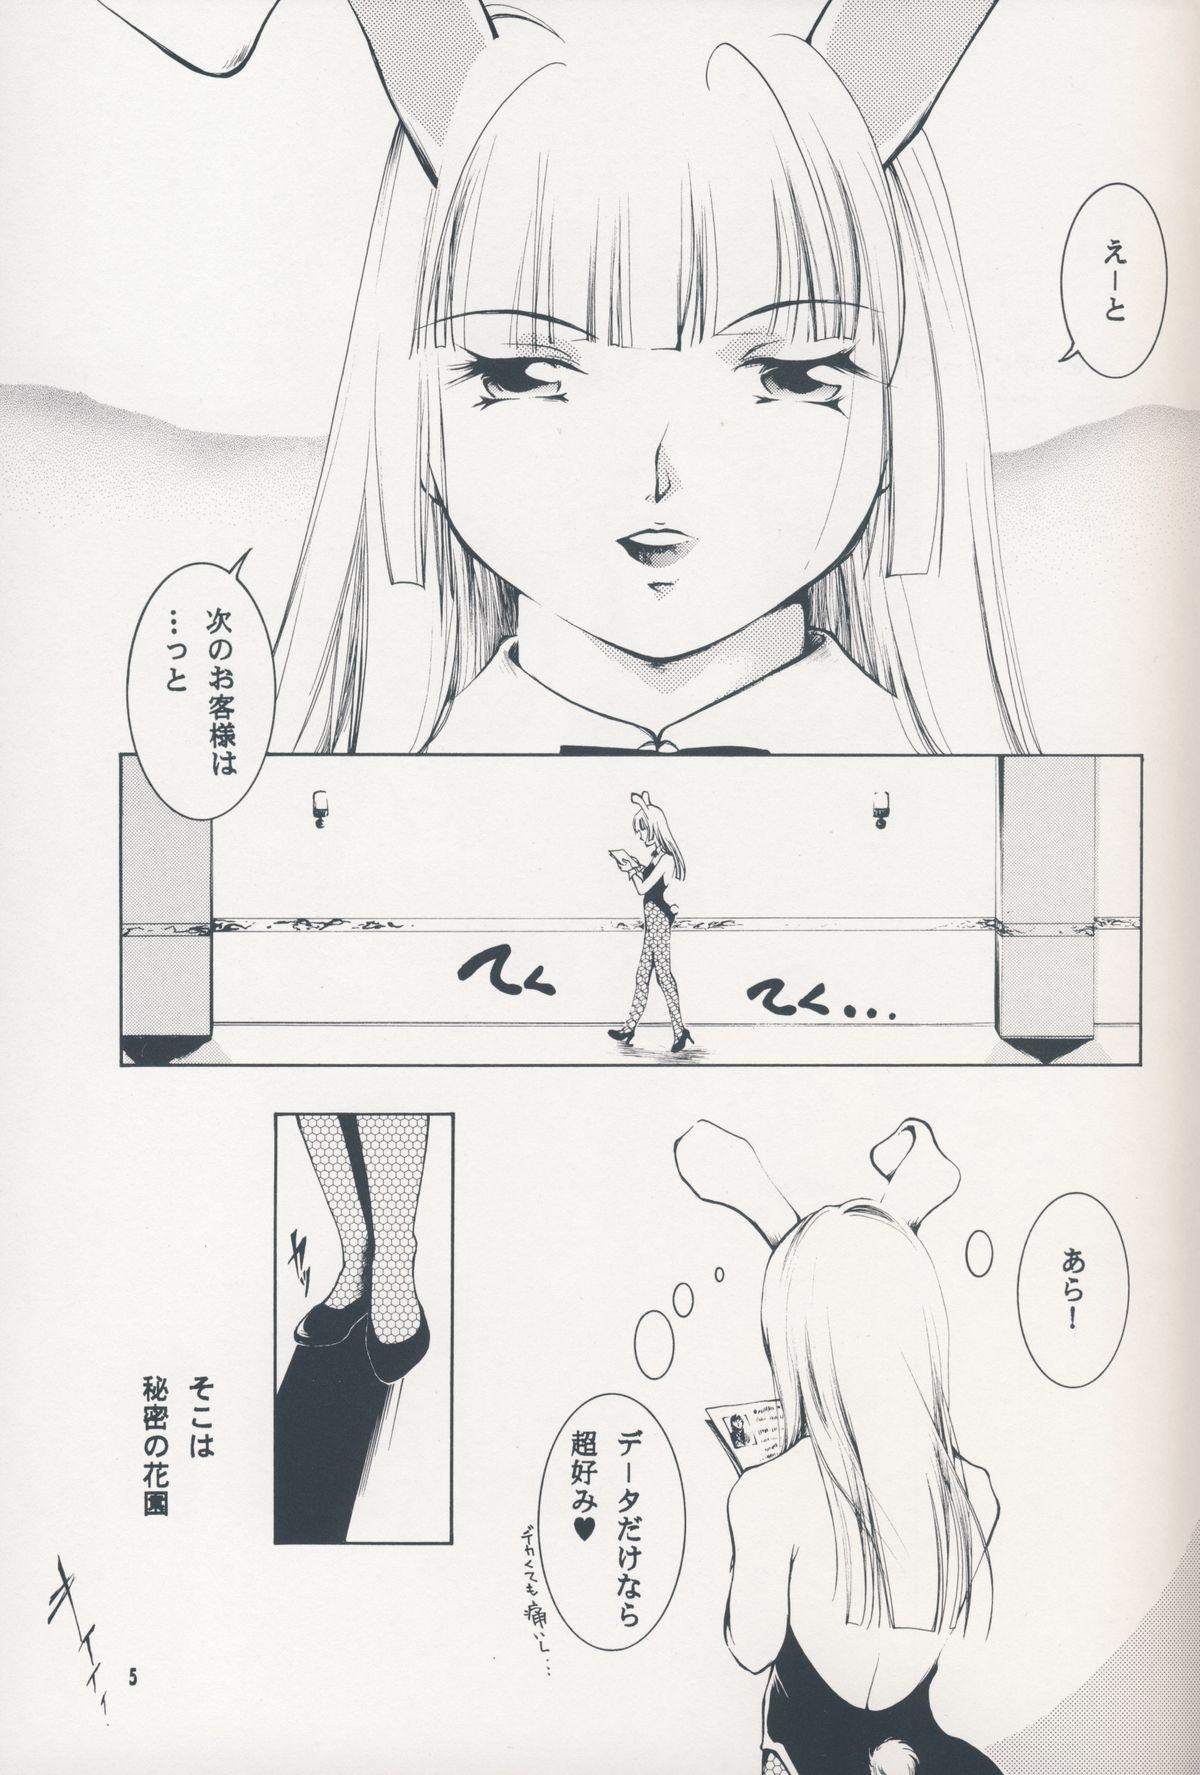 Hot Cunt Hadashi no VAMPIRE 7 - Vampire princess miyu Pareja - Page 4